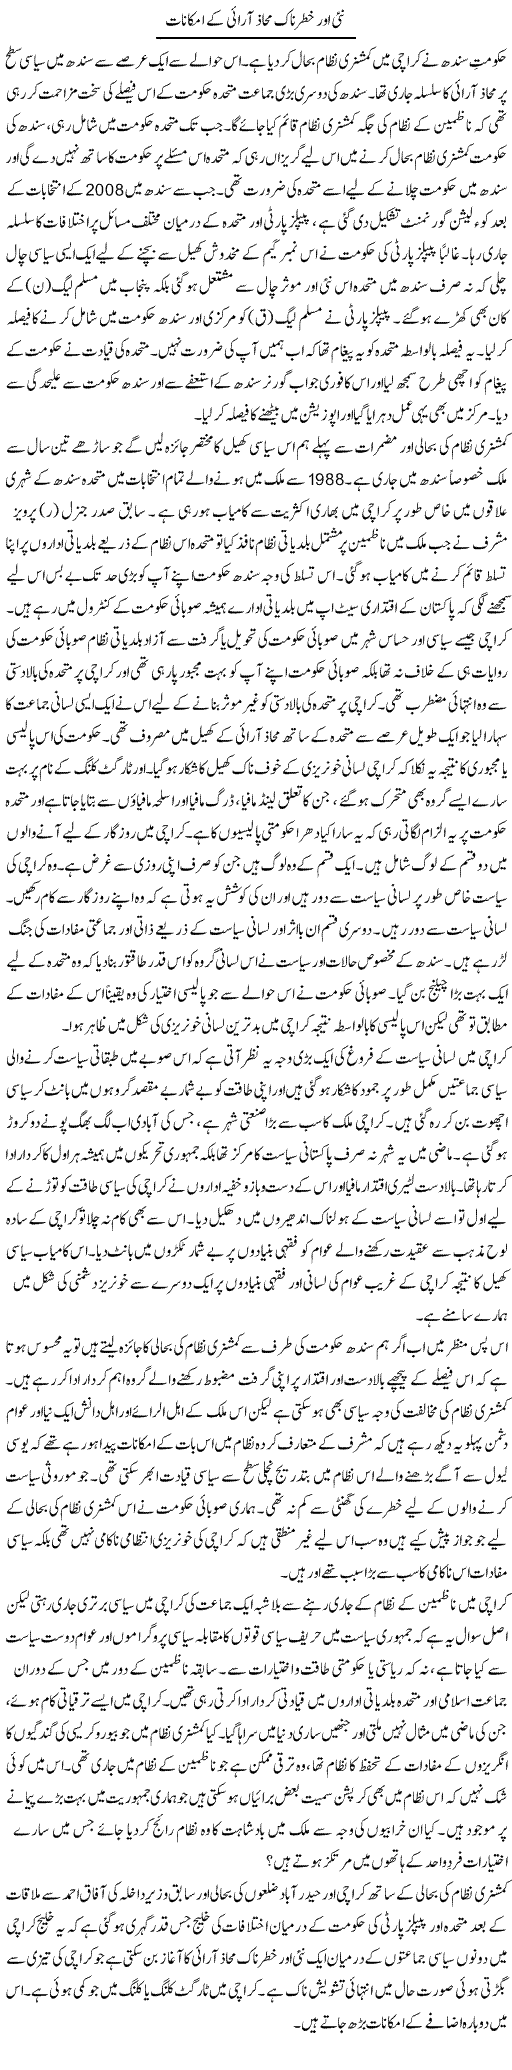 MQM in Sindh Express Column Zaheer Akhtar 18 July 2011